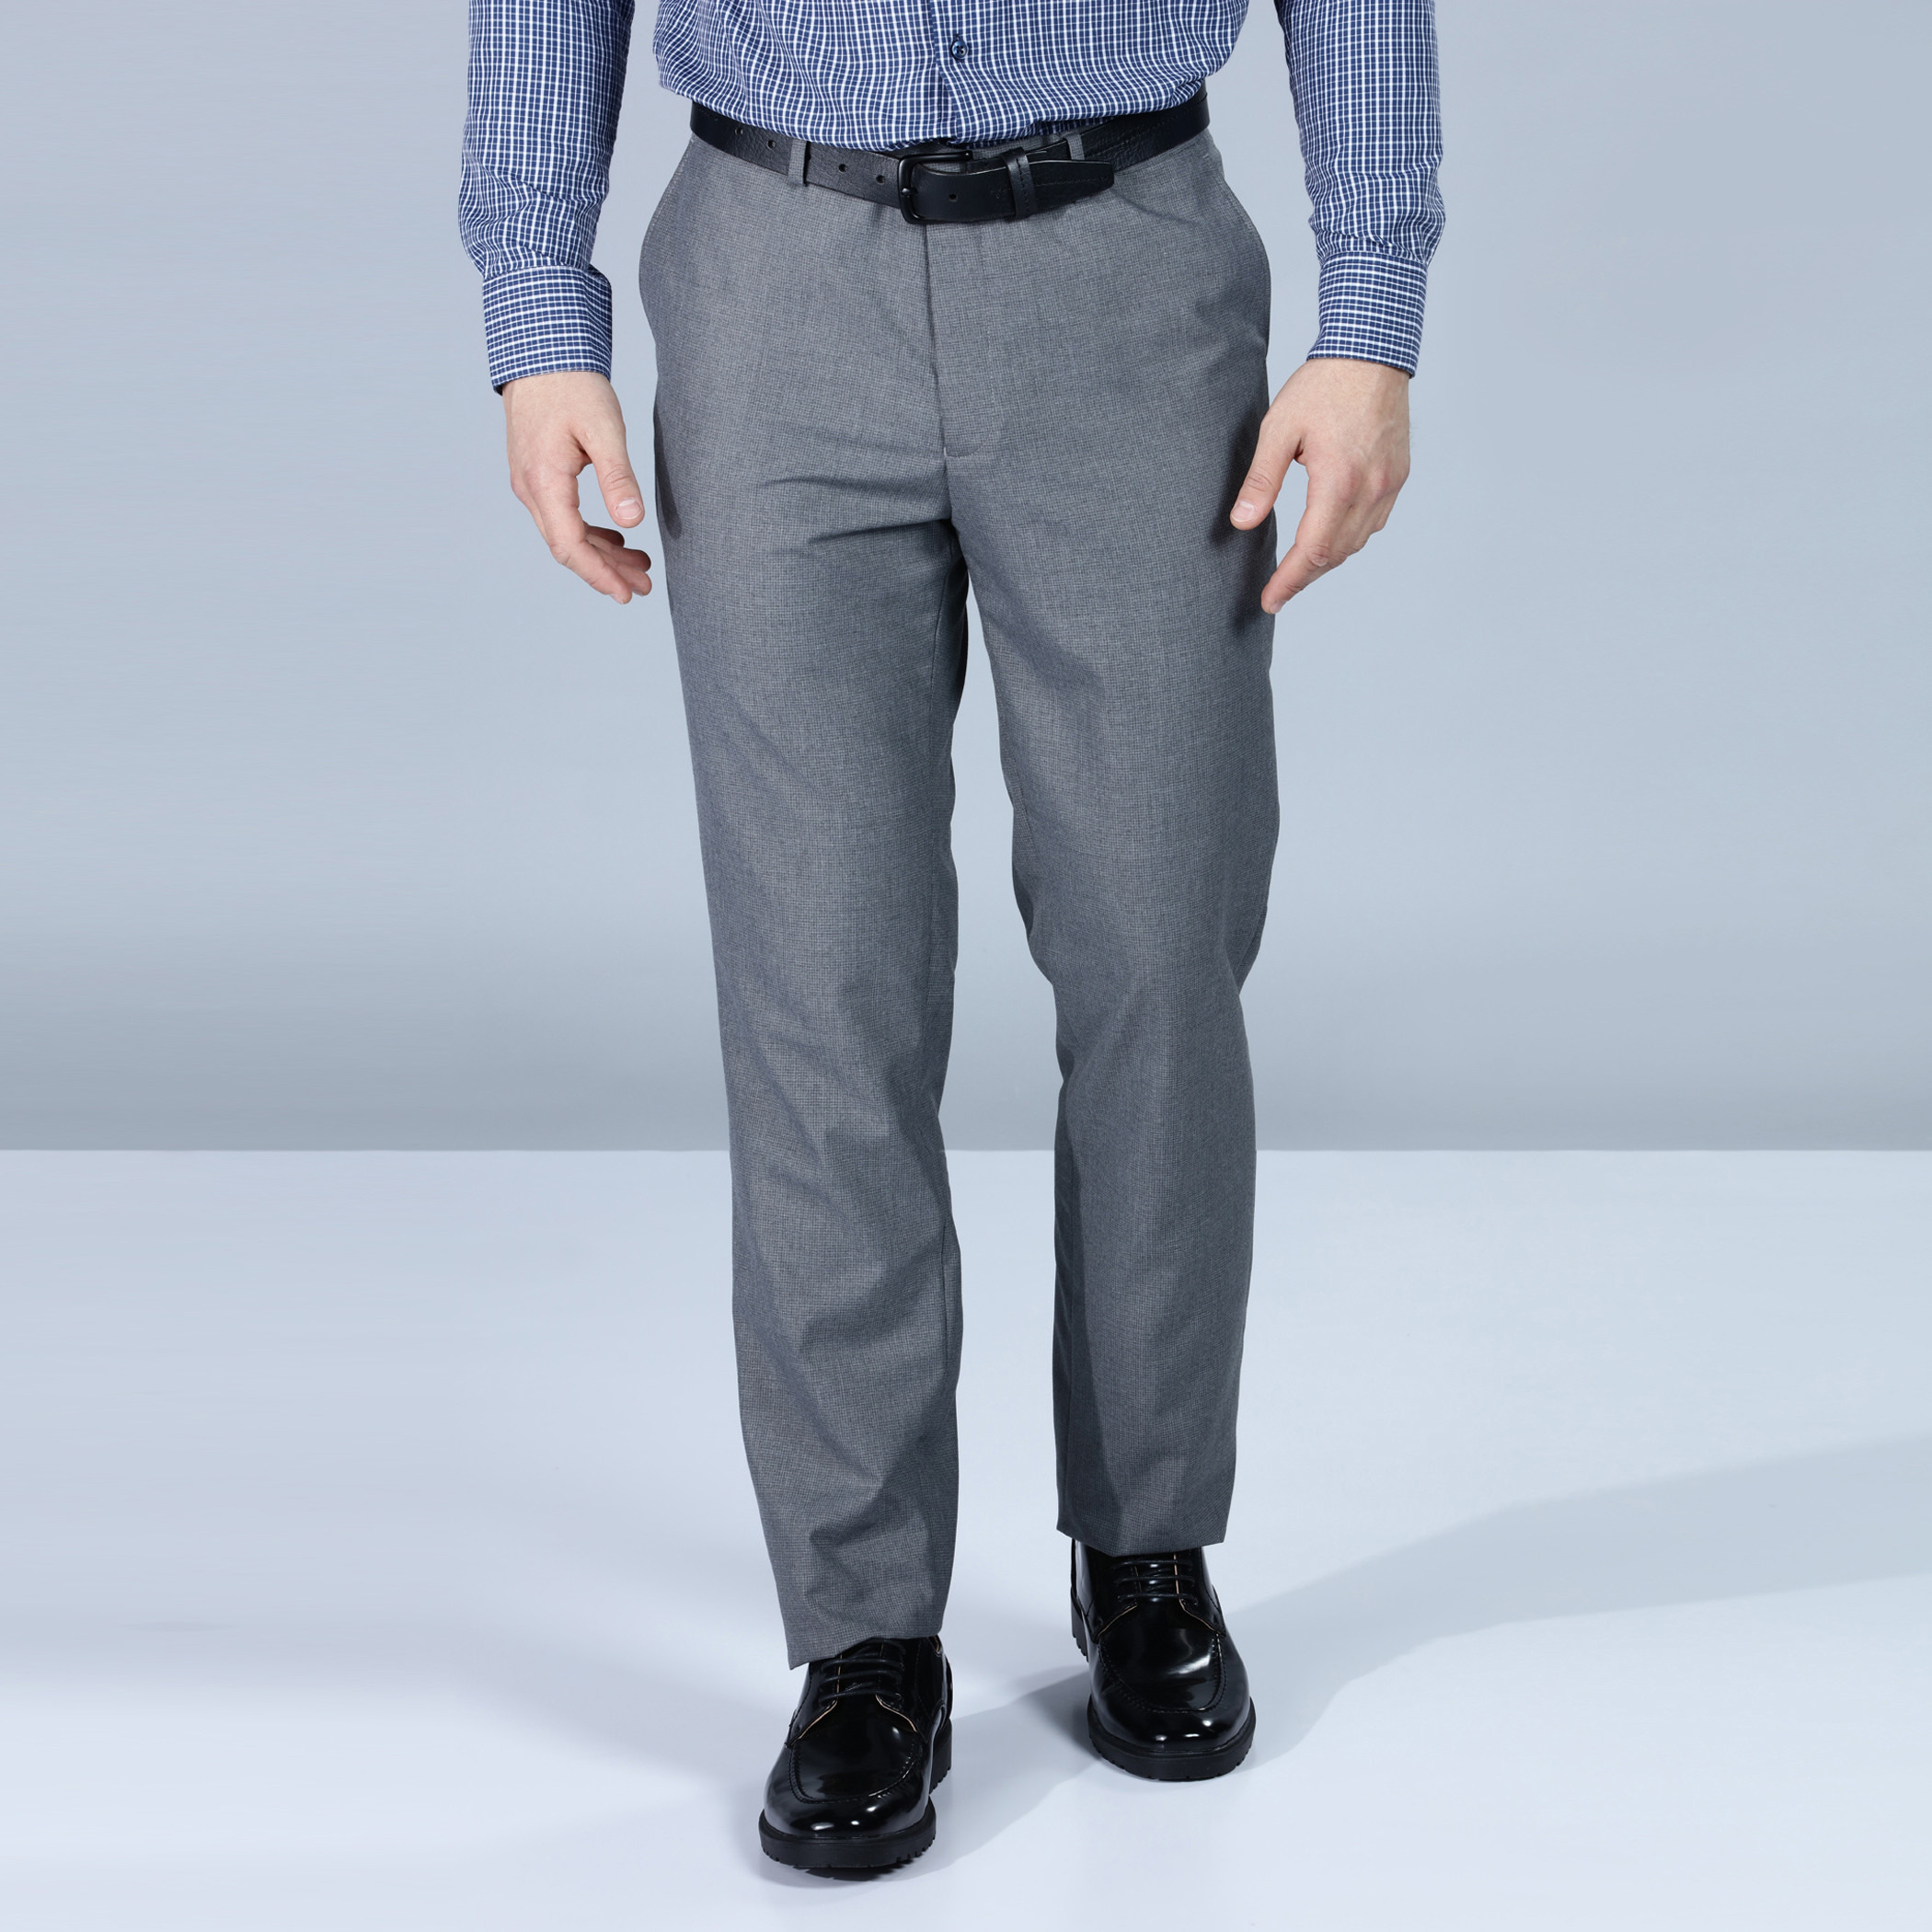 Shop Full Length Slim Fit Formal Pants Online | Max Bahrain